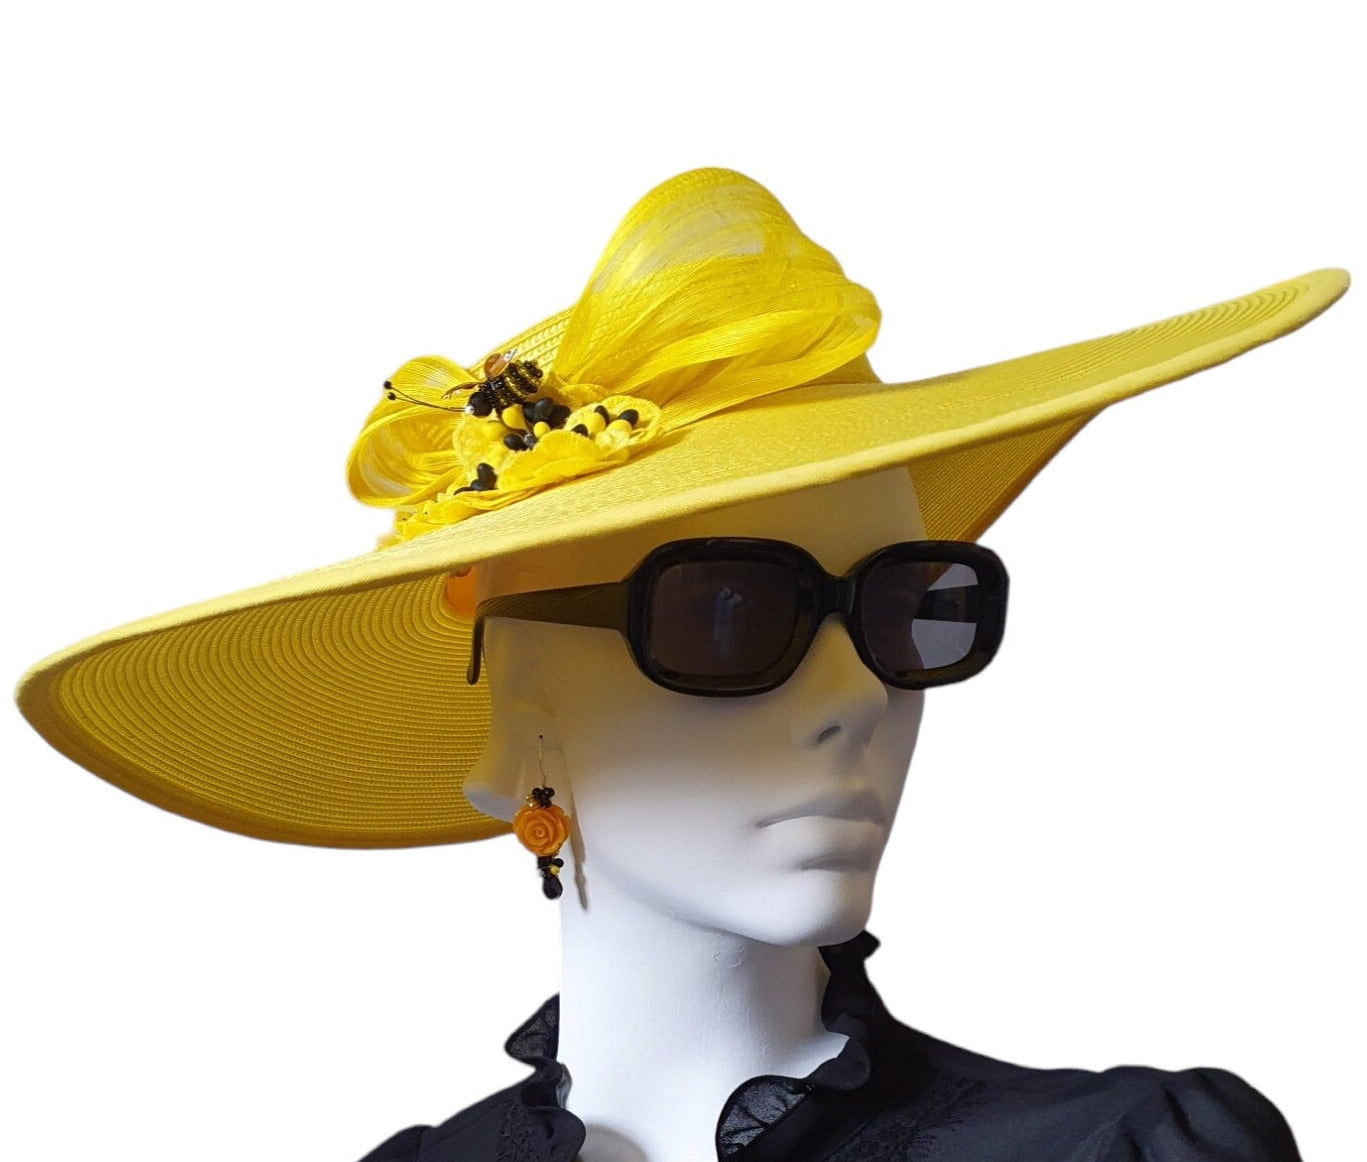 Elegant Yellow Polypropylene Wedding Pamela Hat for Guests - Silk Abaca, Wide Brim, Perfect for Summer Events